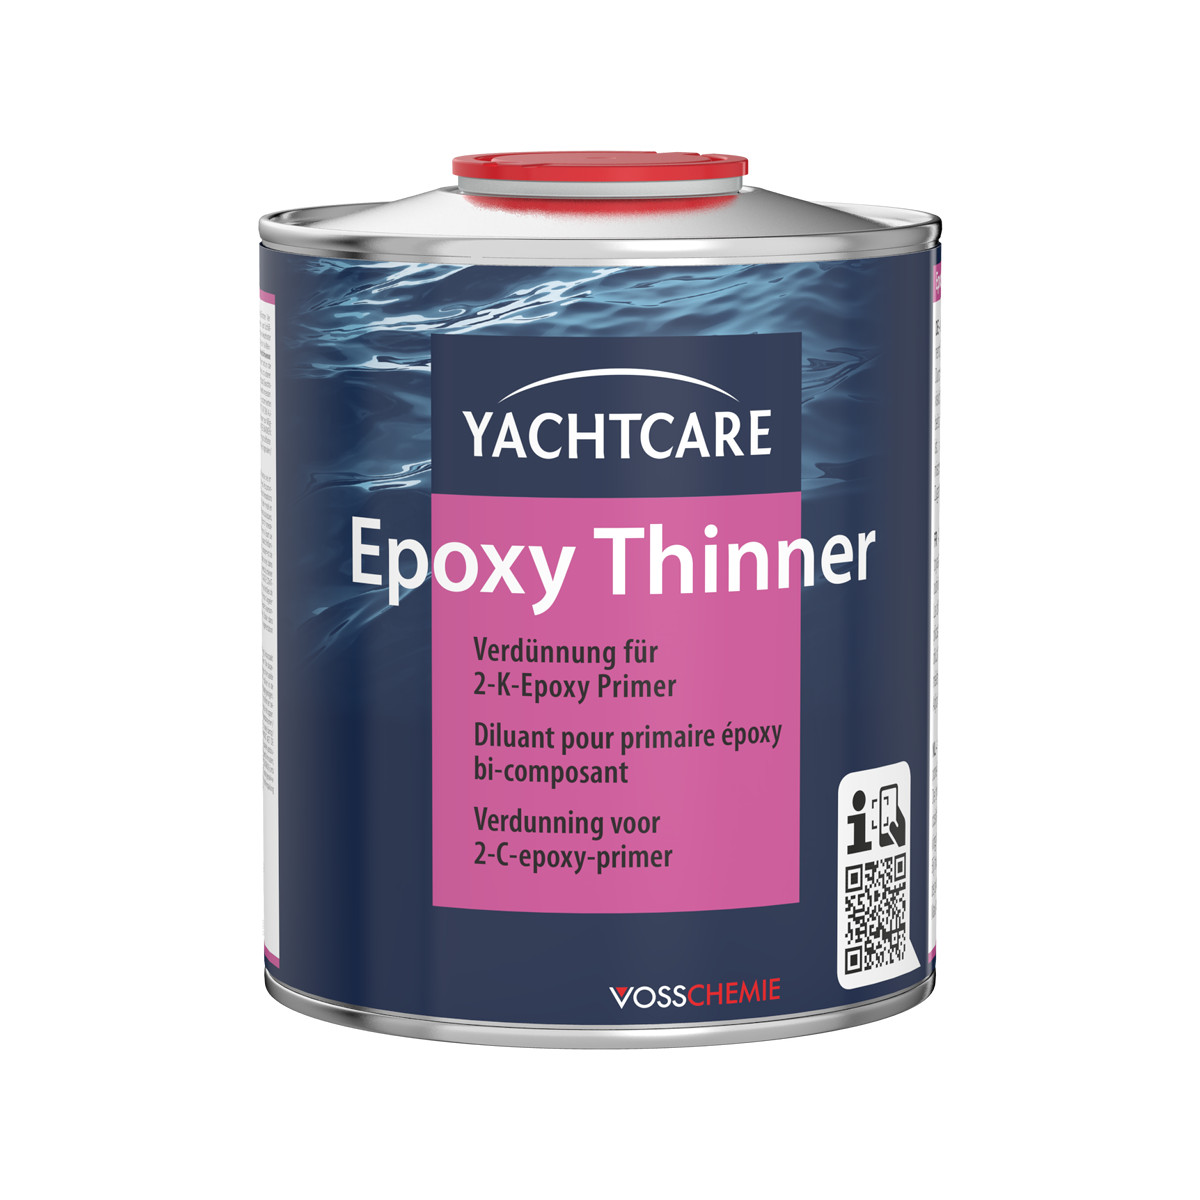 Yachtcare Epoxy Thinner verdunning voor 2-C-epoxy-primer